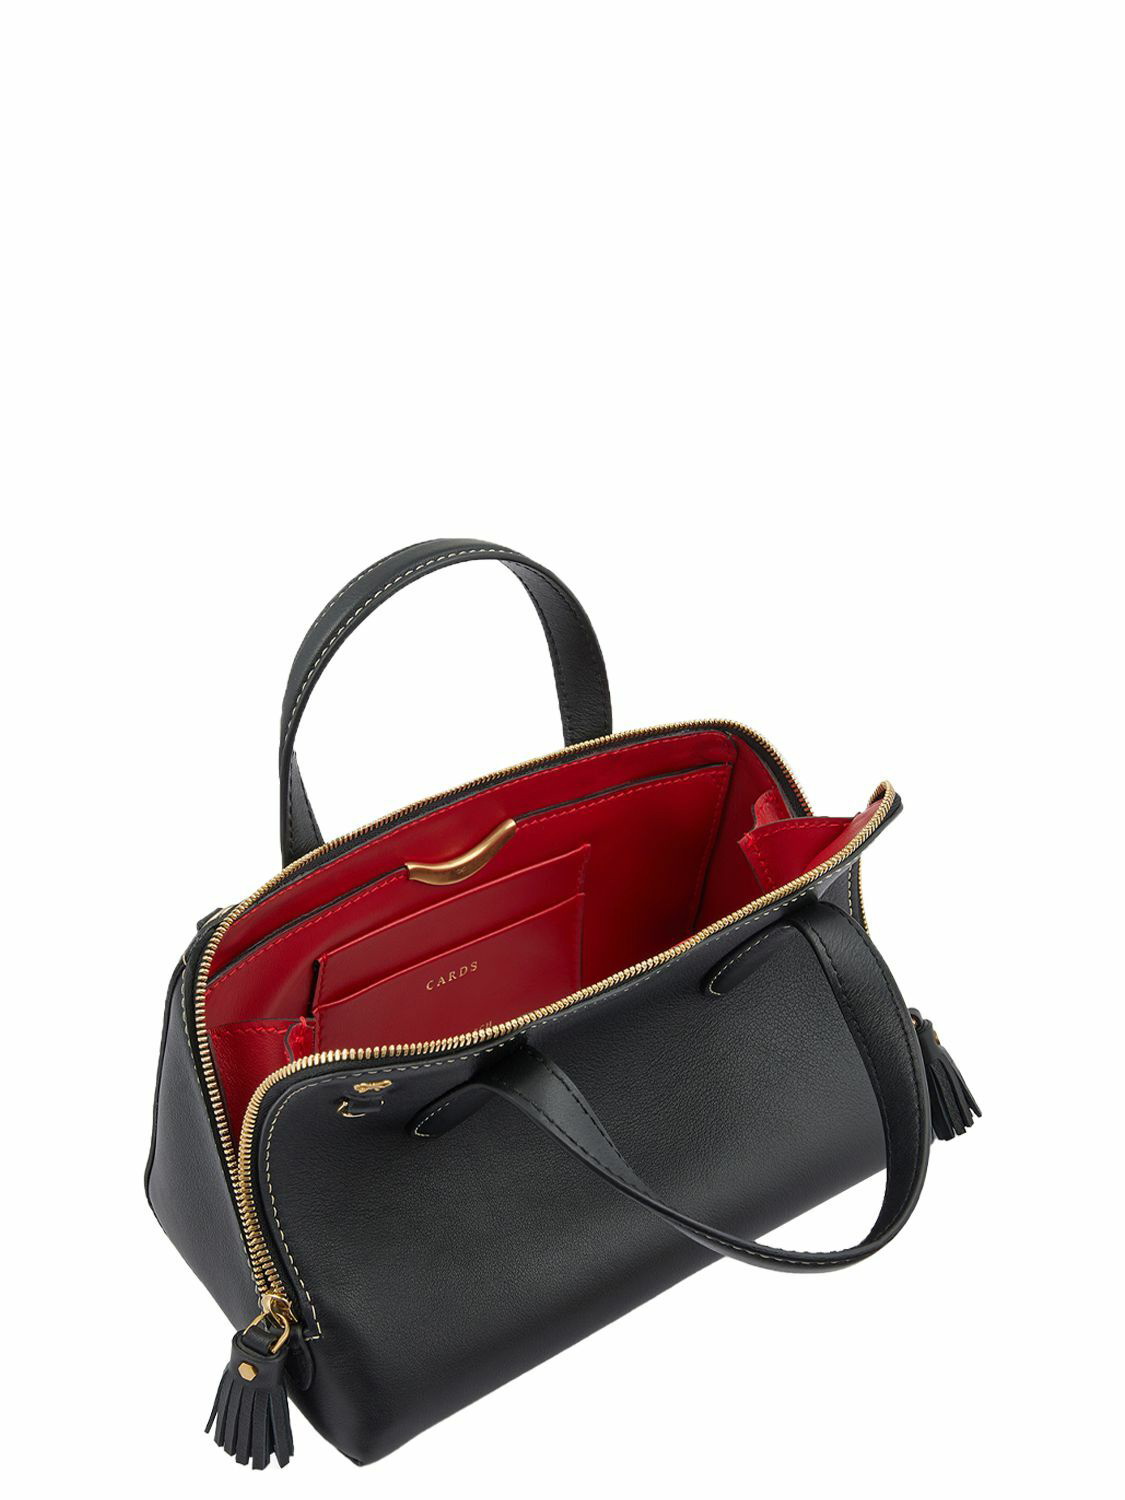 ANYA HINDMARCH - The Small Wedge Leather Top Handle Bag Anya Hindmarch